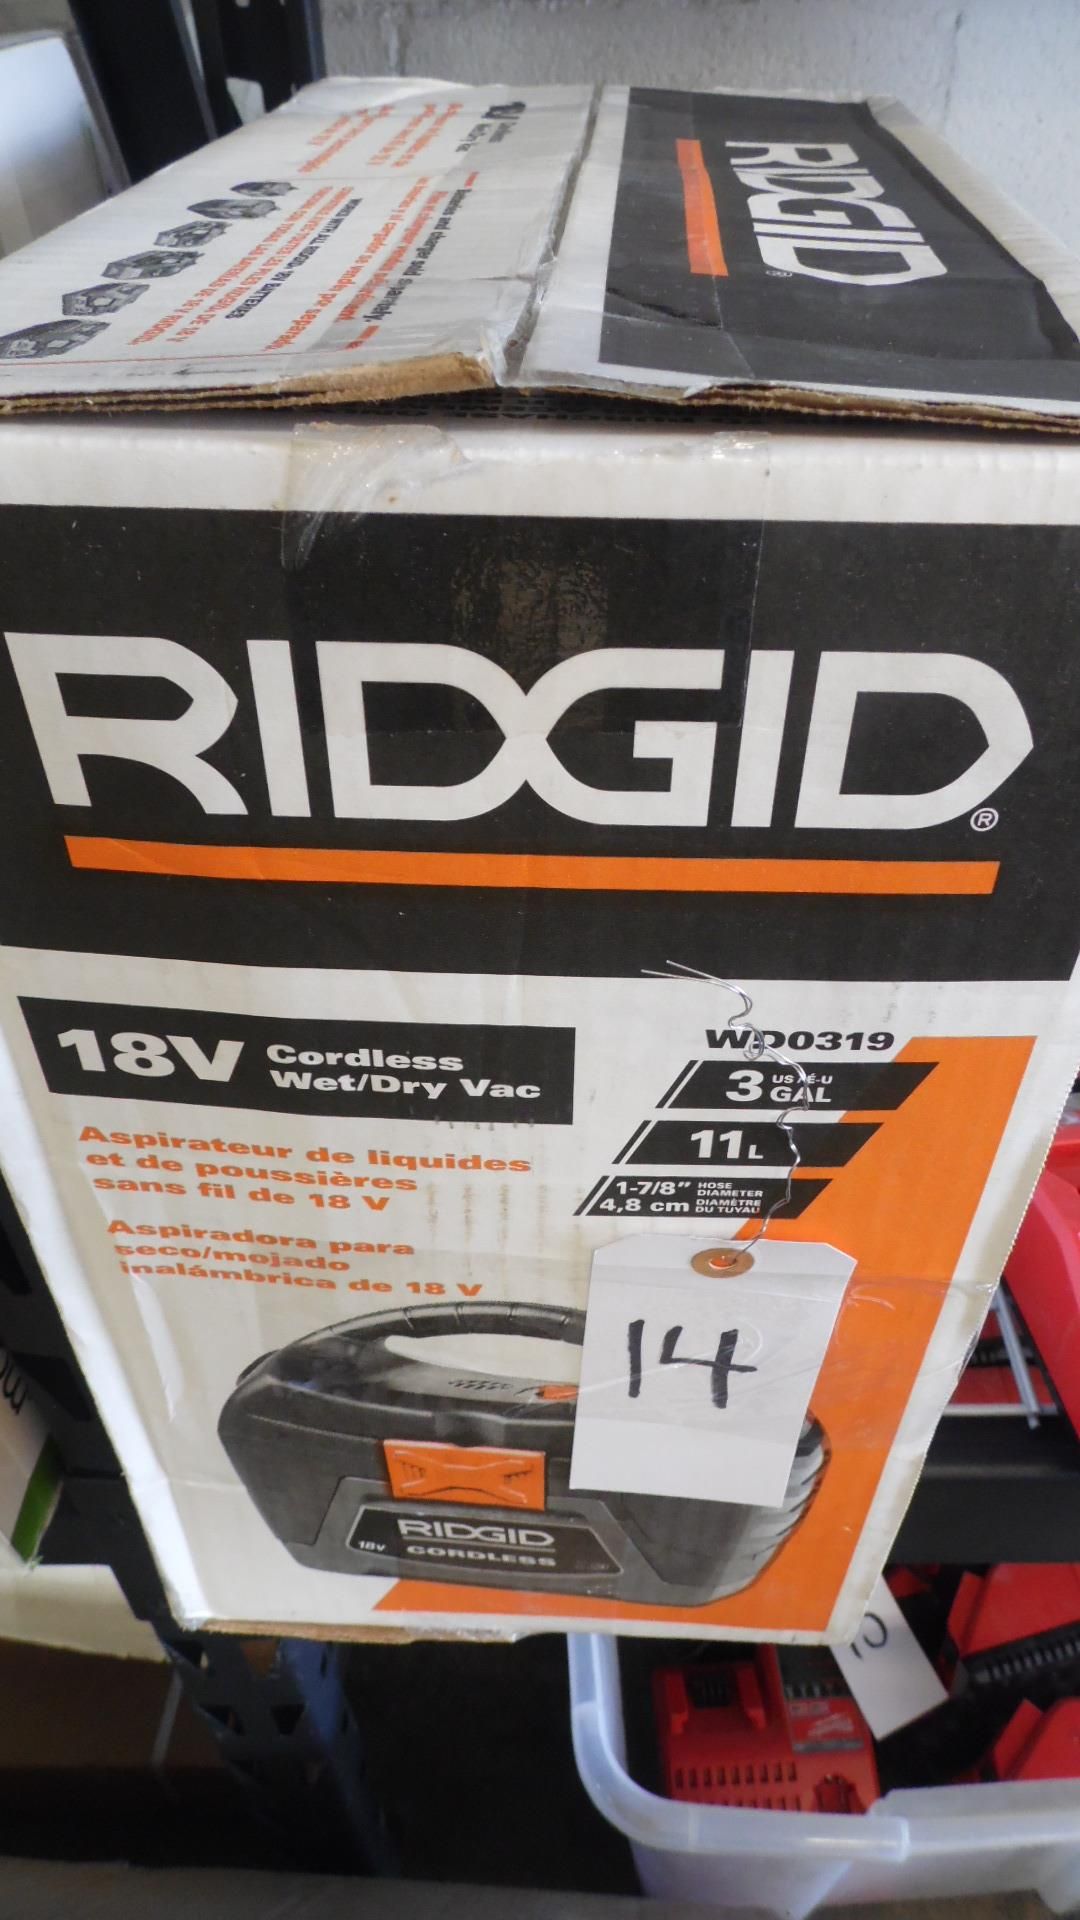 RIDGID 18V CORDLESS WET/DRY VAC (Tested, works}